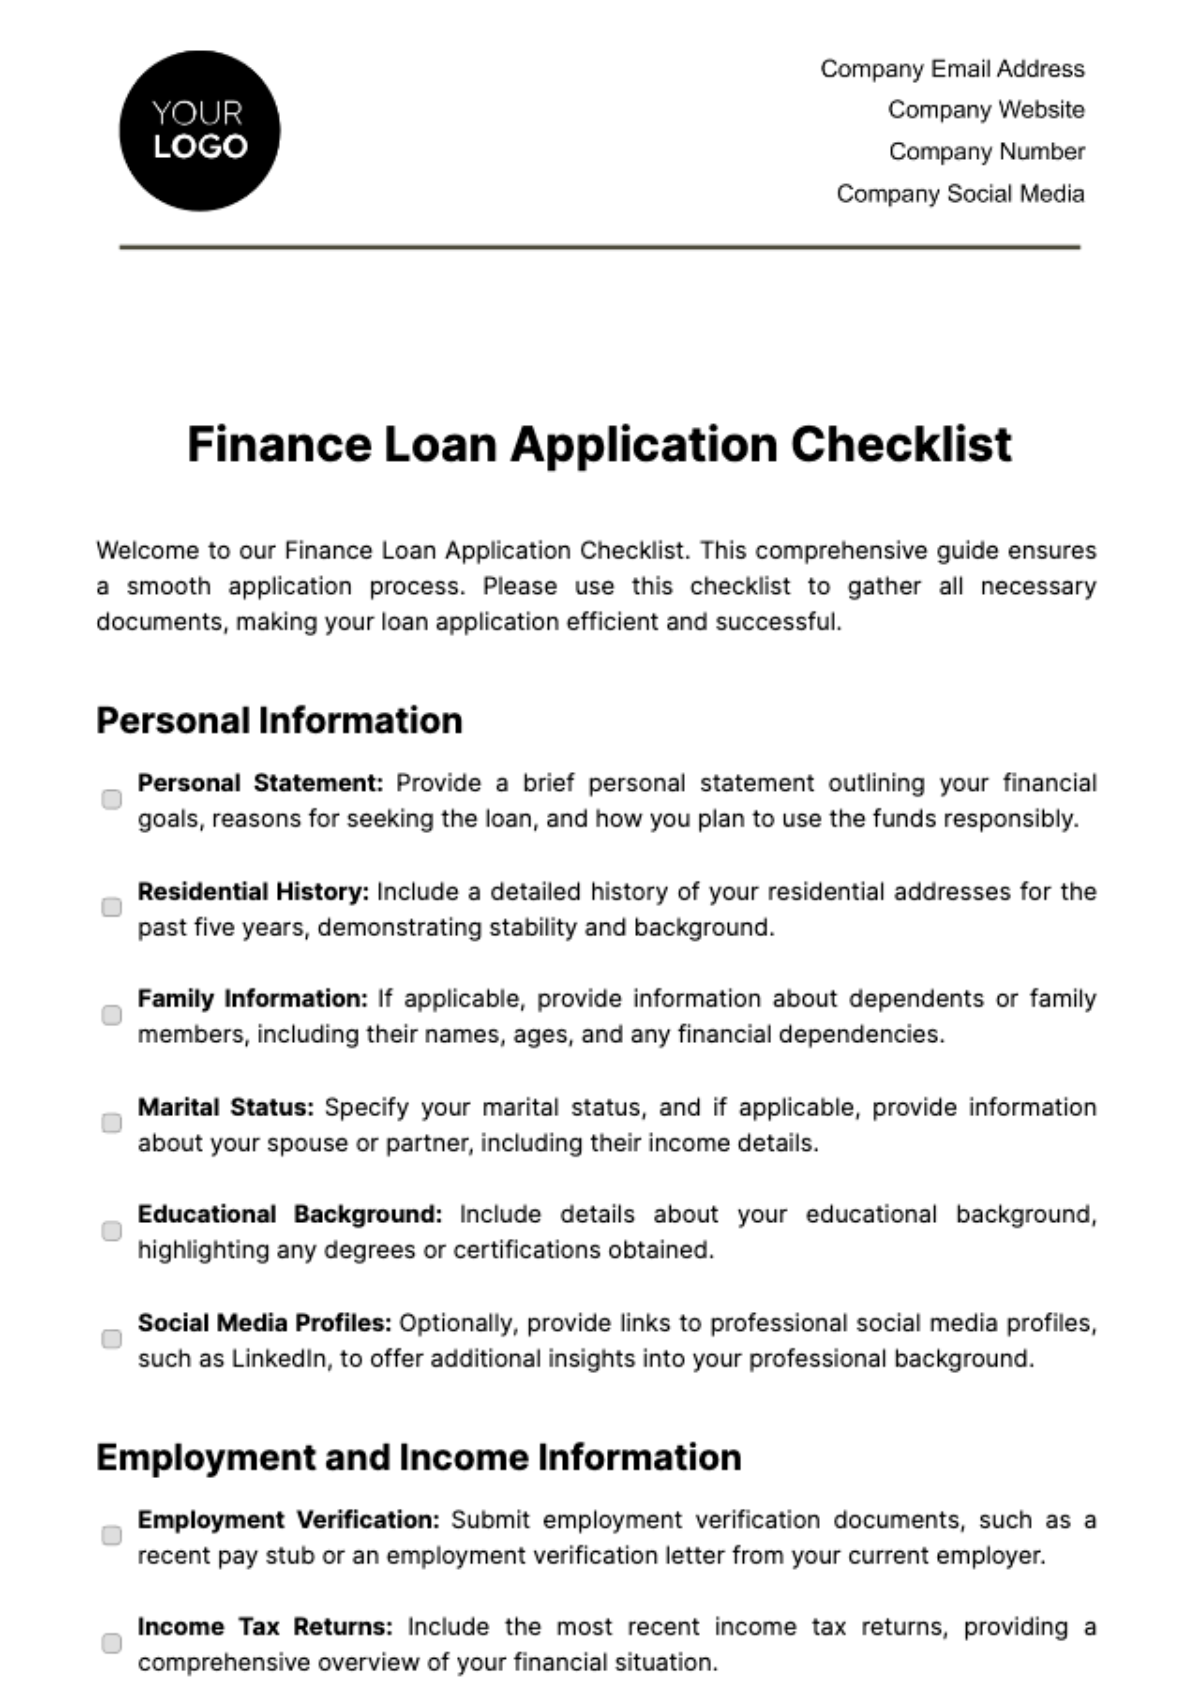 Free Finance Loan Application Checklist Template